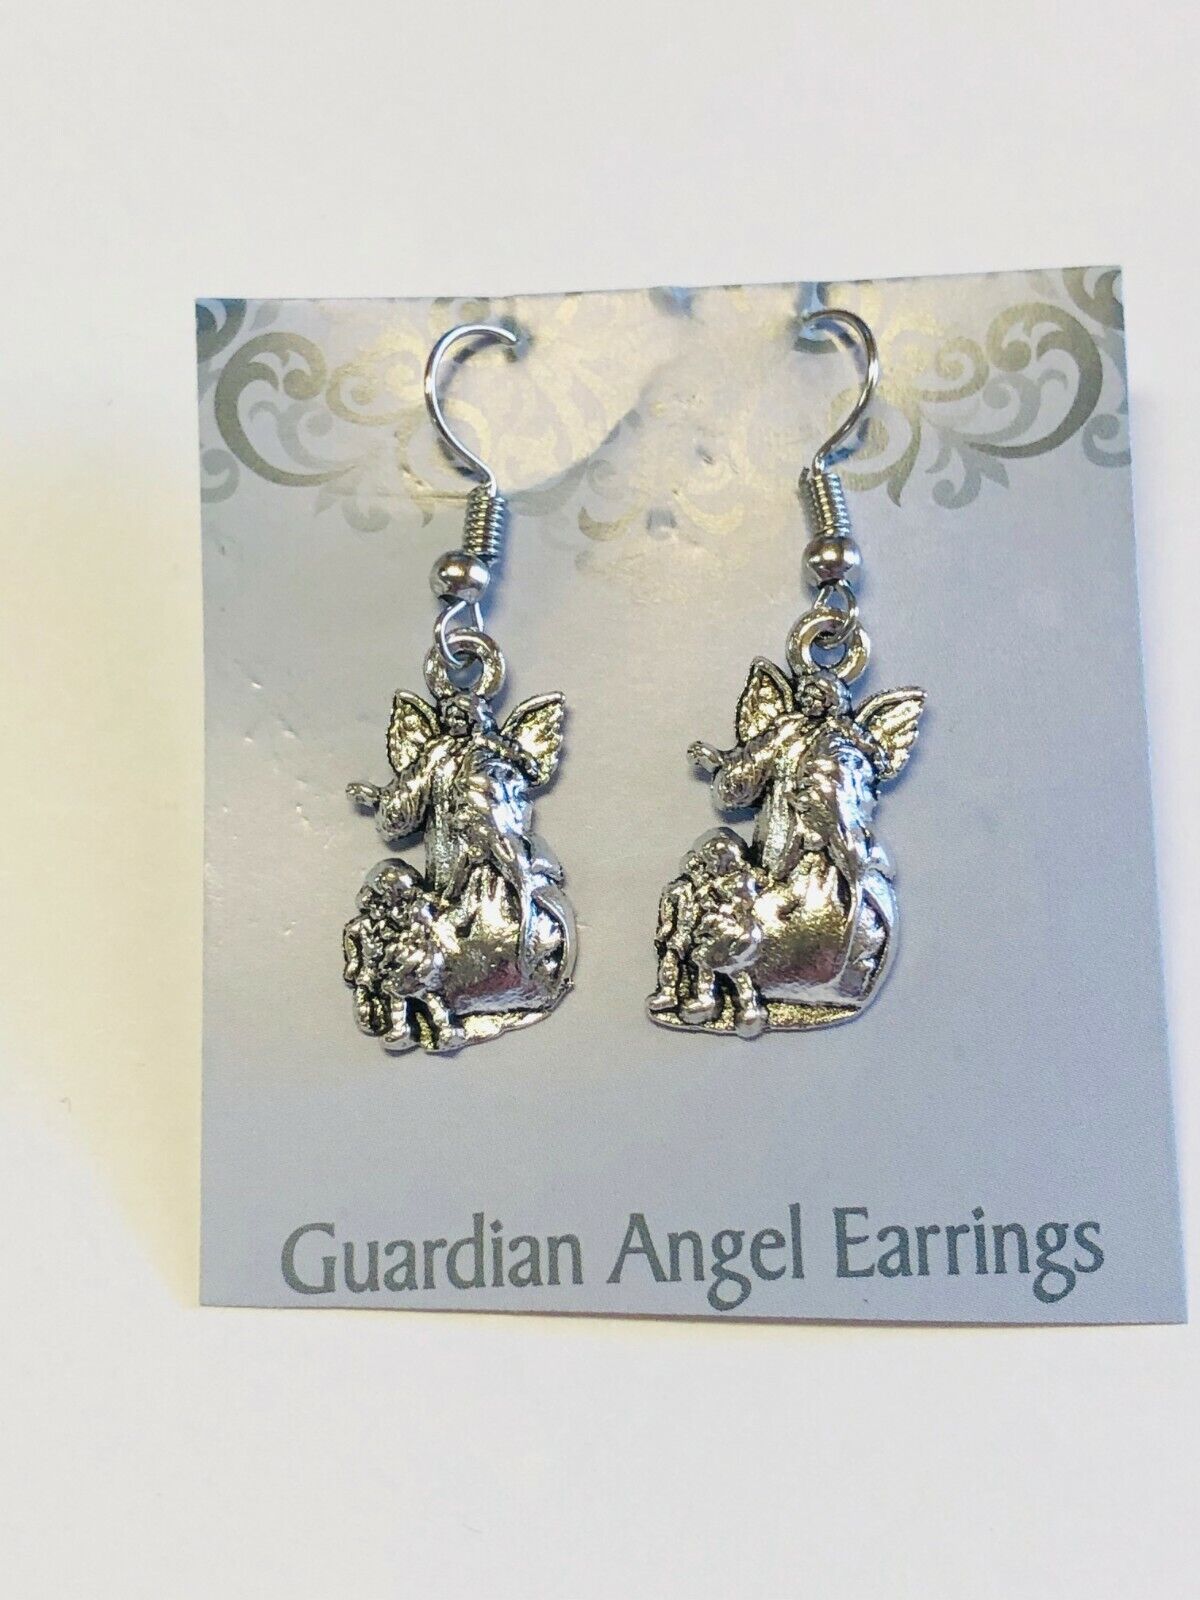 Guardian Angel Earrings, Silvertone, New - Bob and Penny Lord